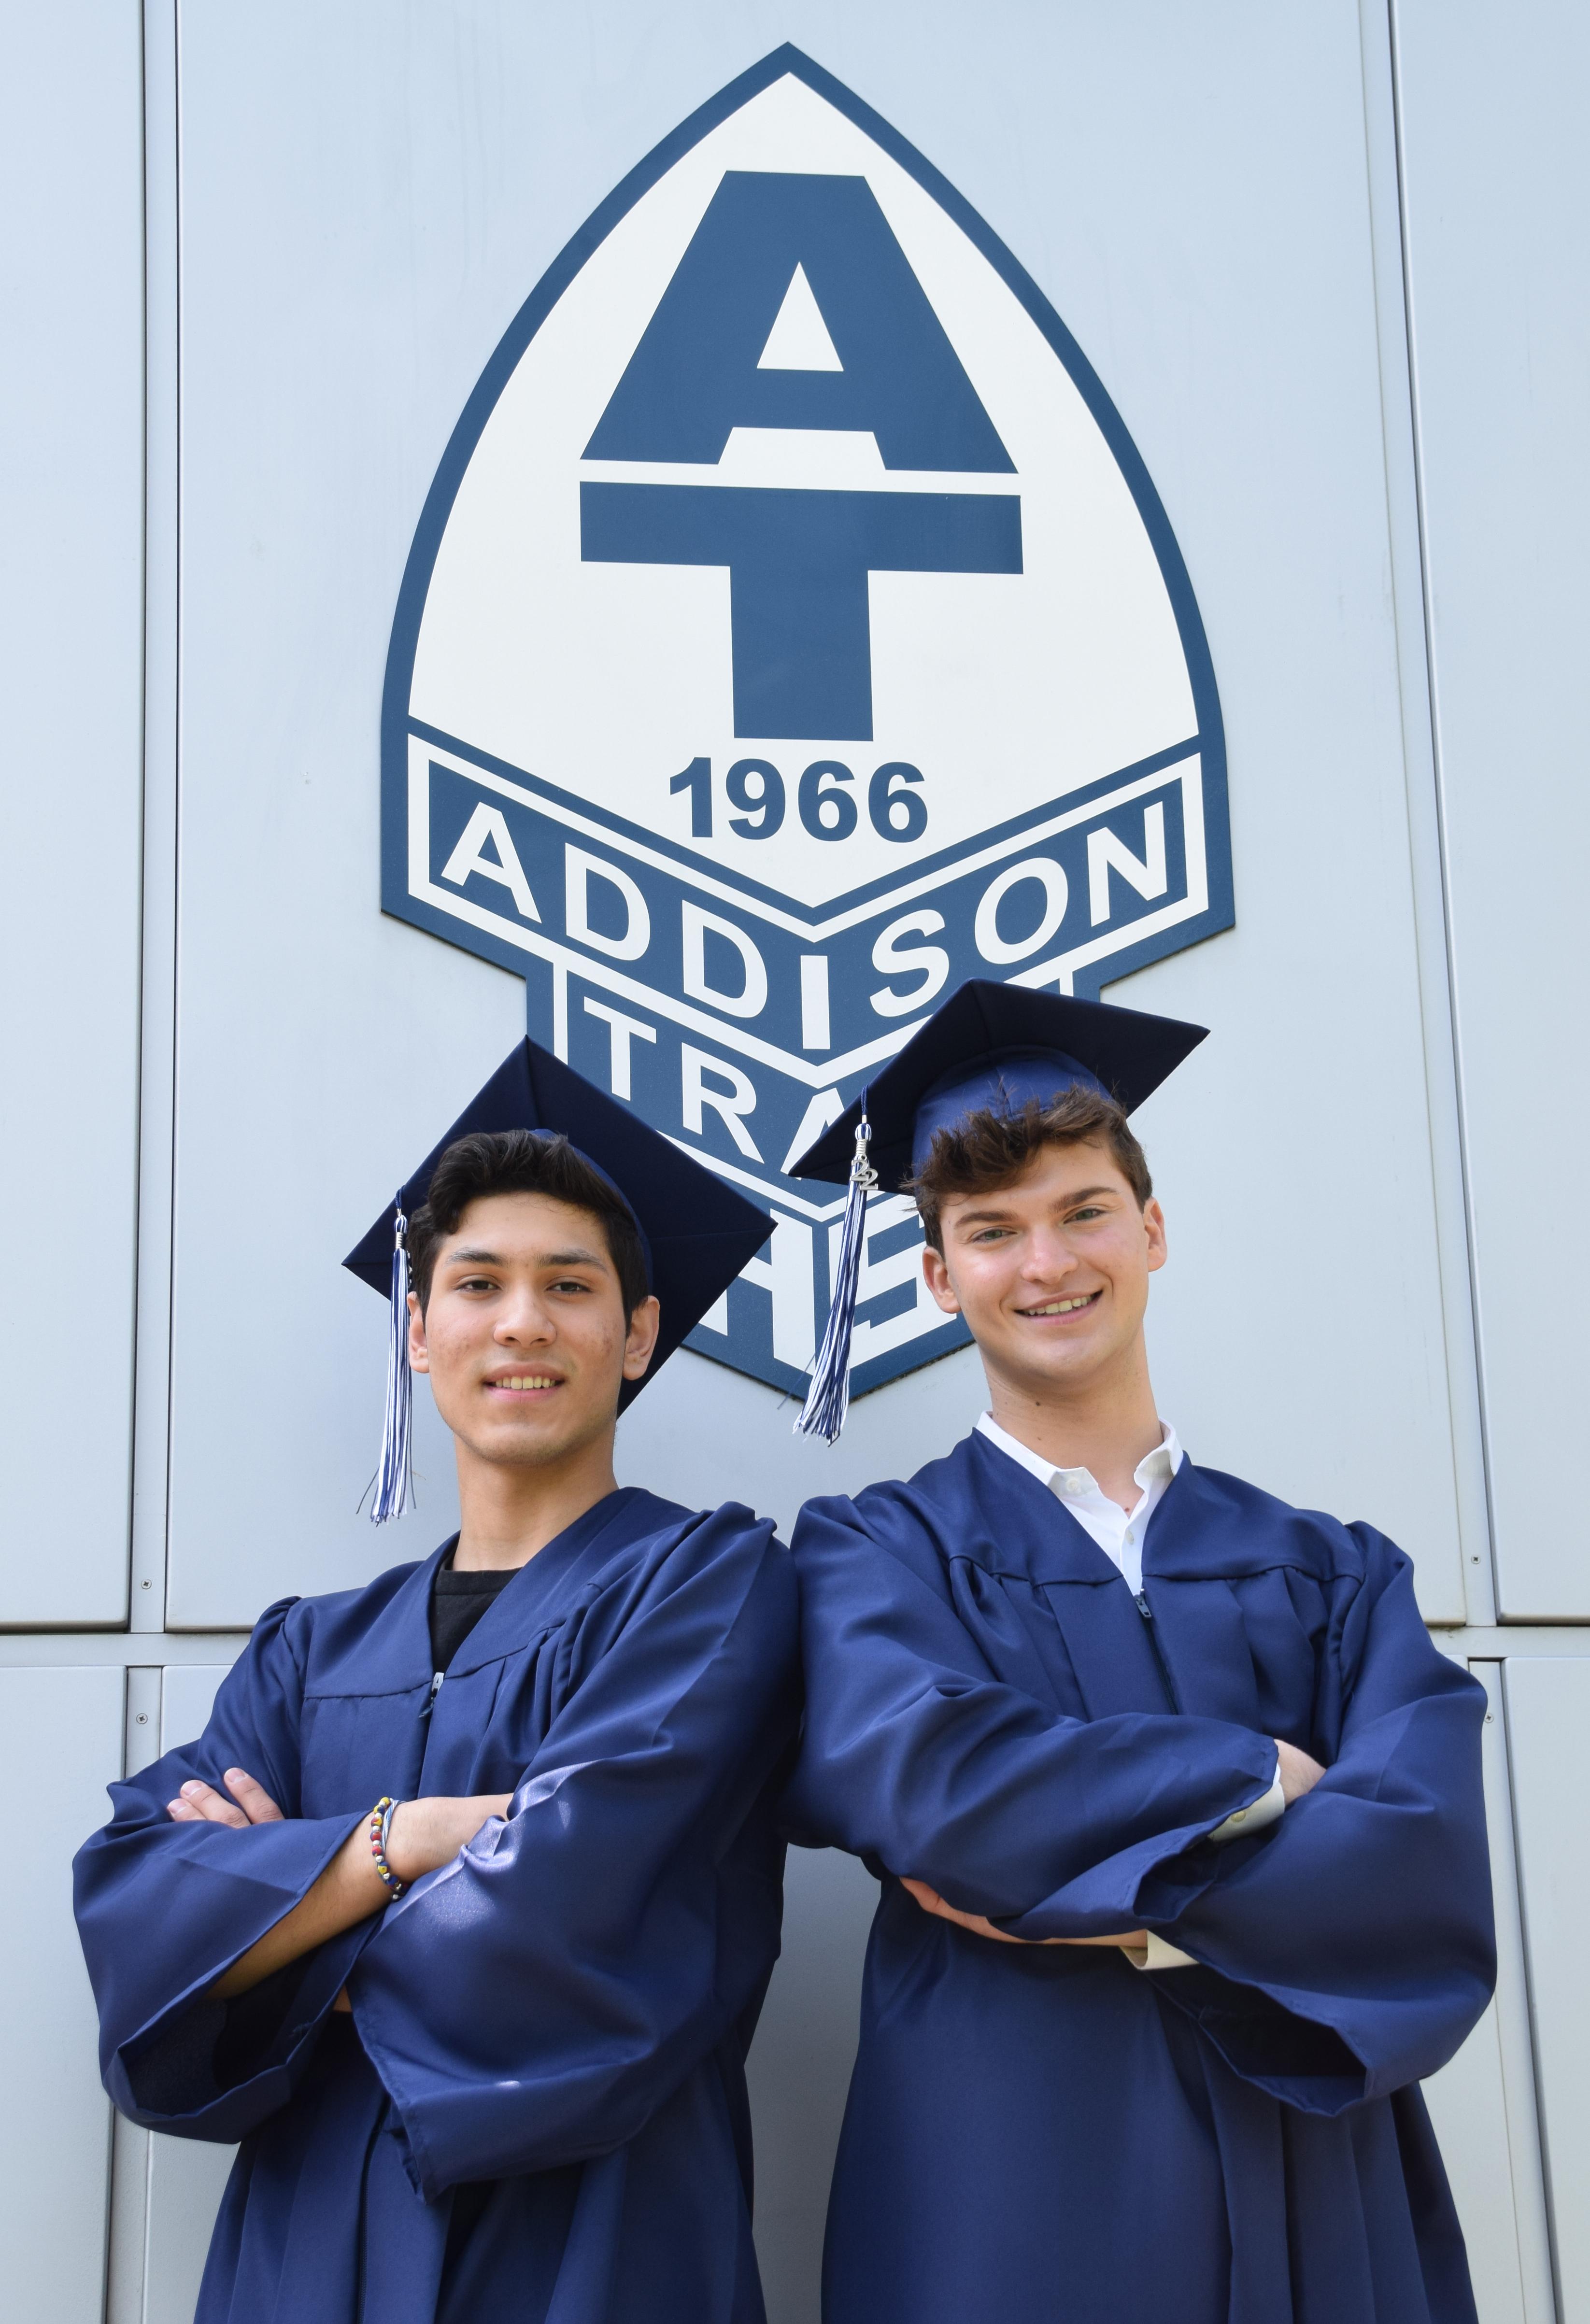 Meet Addison Trail’s class of 2022 graduation speakers